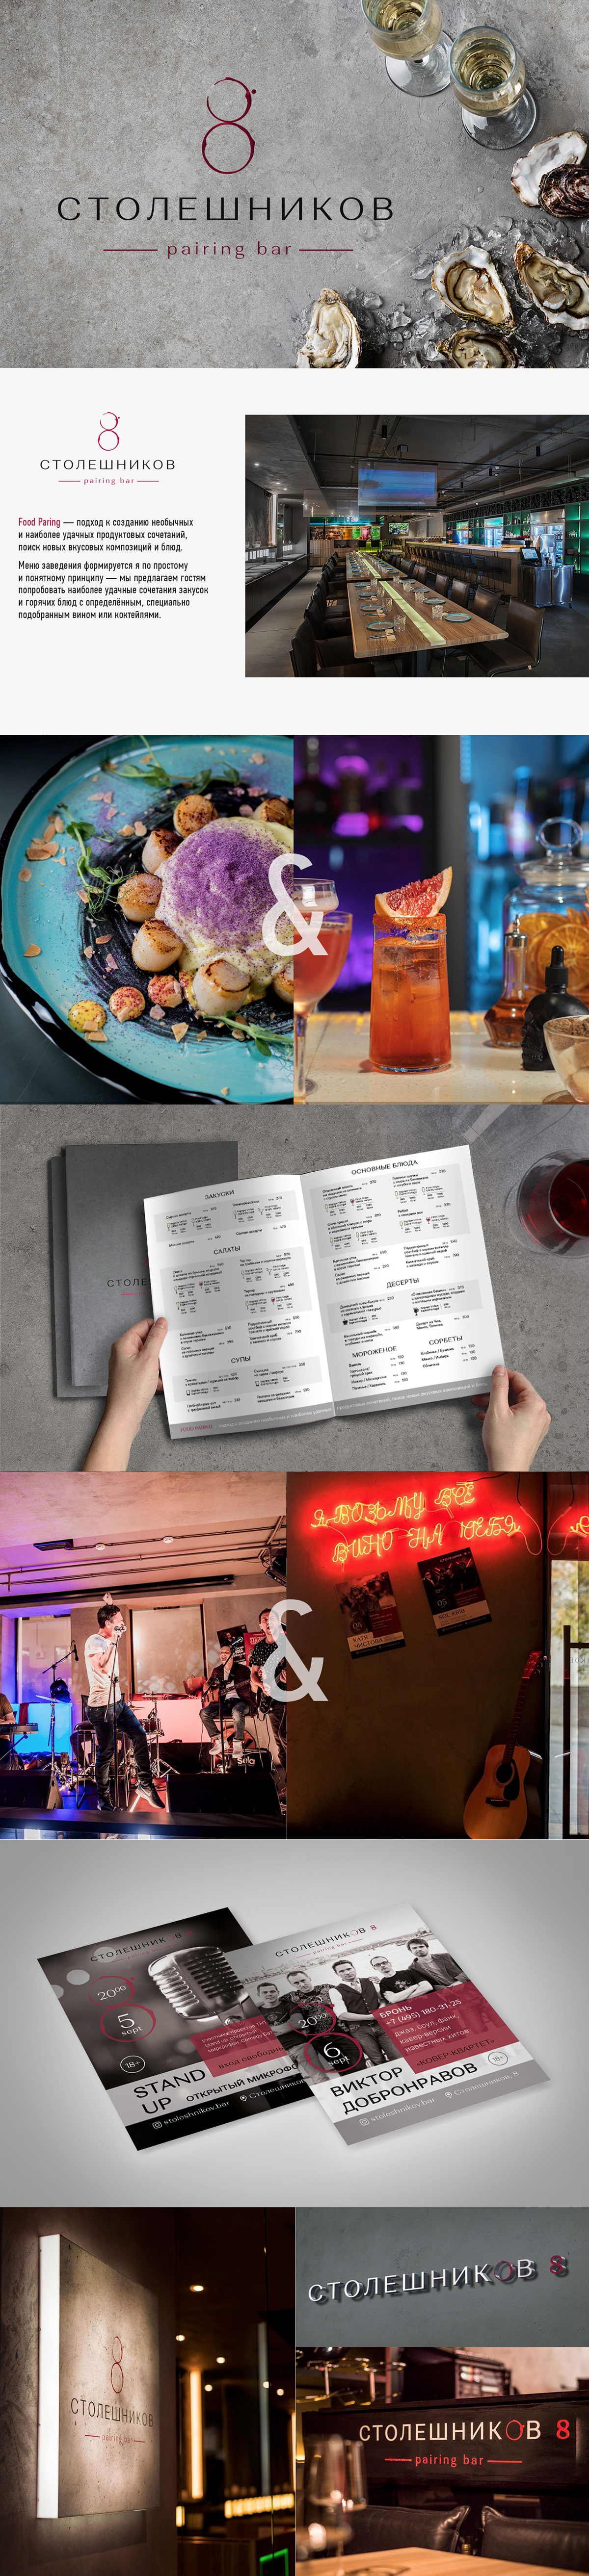 bar design drink logo menu pairing restaurant